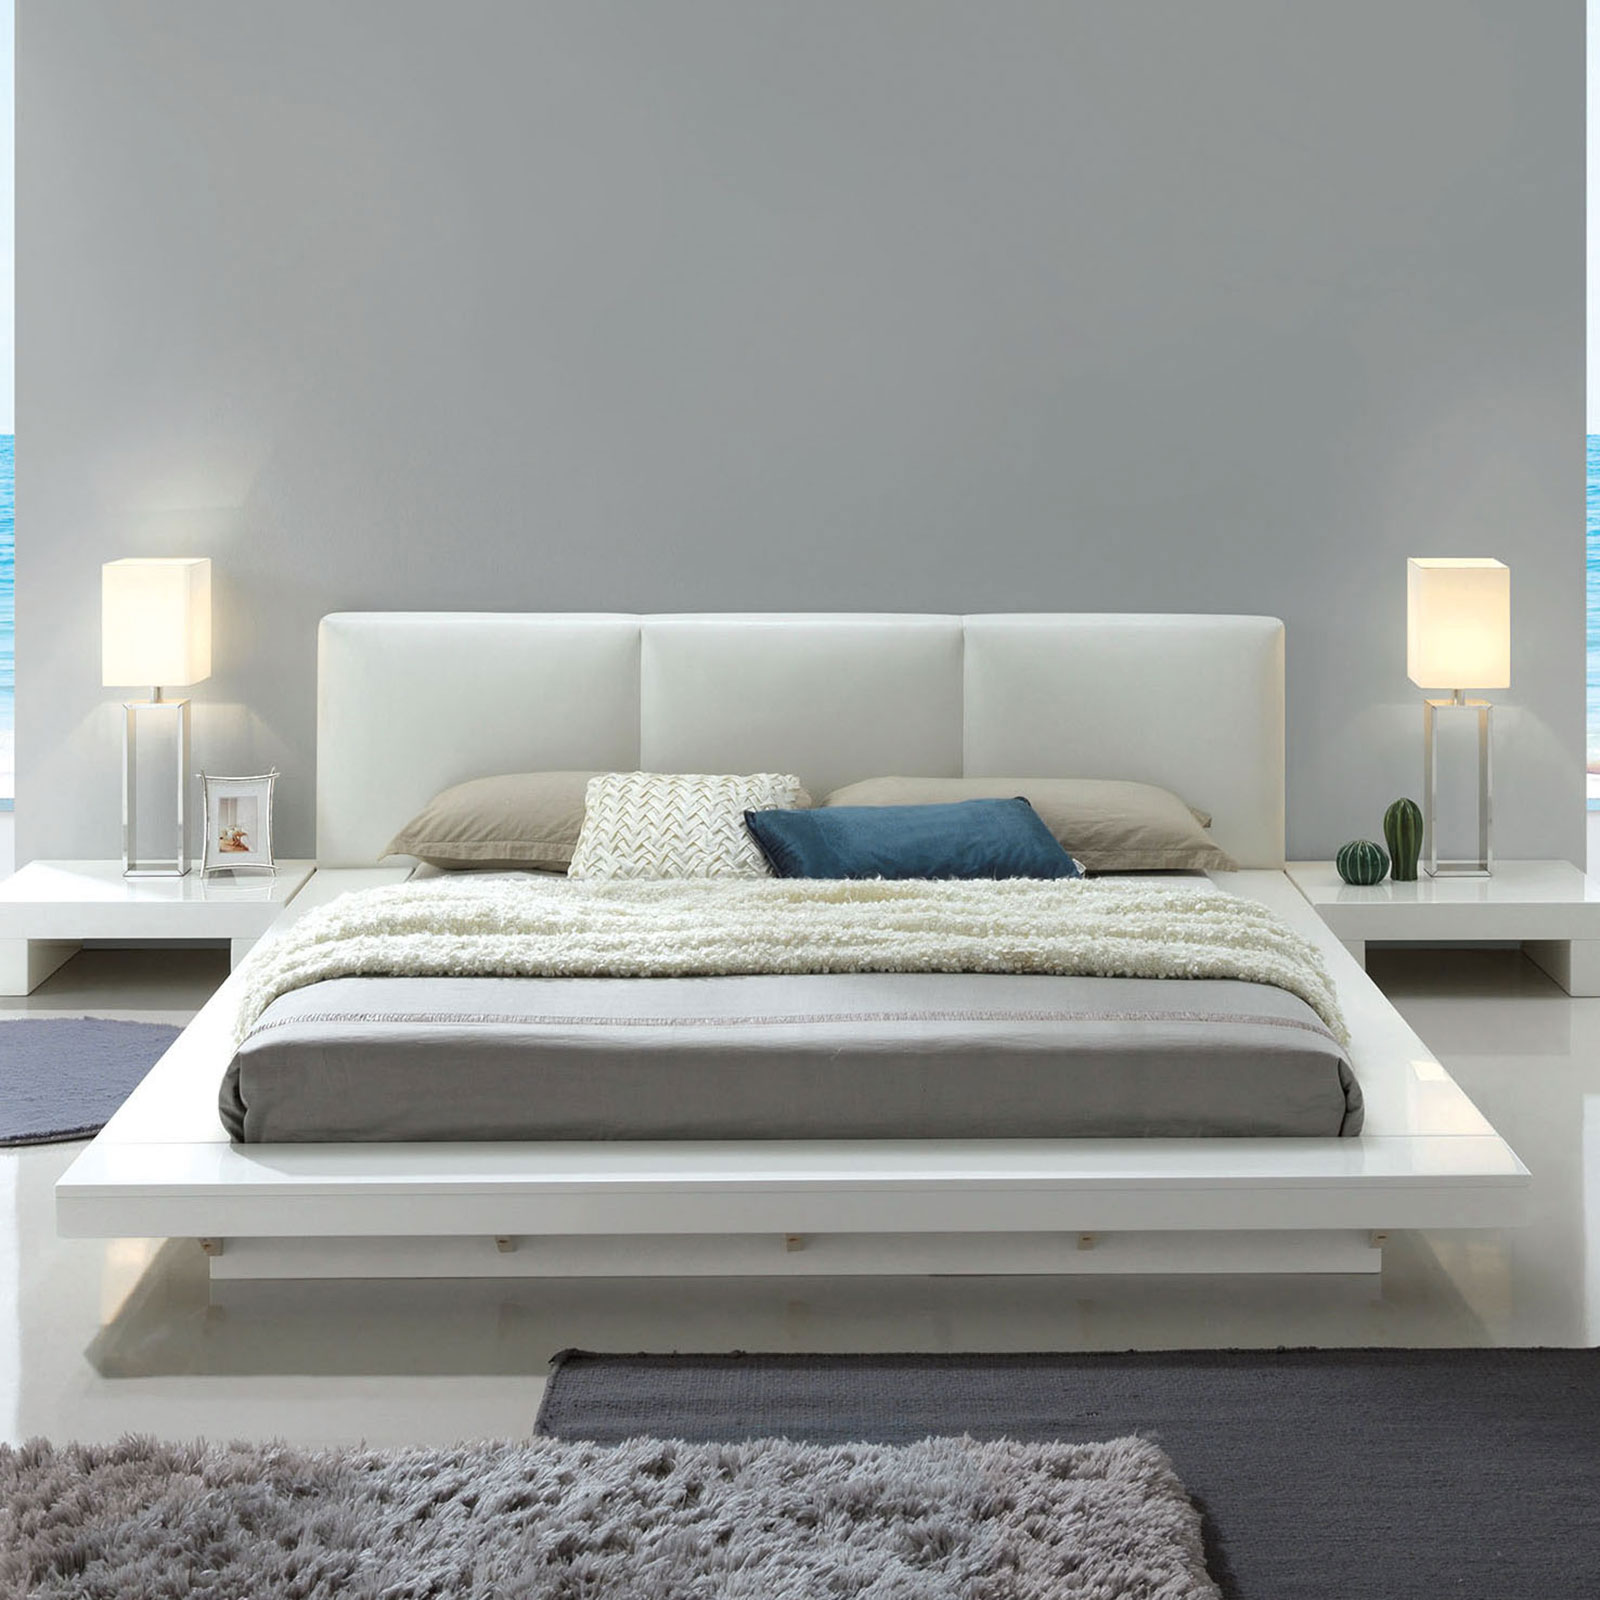 Esofa Contemporary White Color, Modern California King Bed Frame